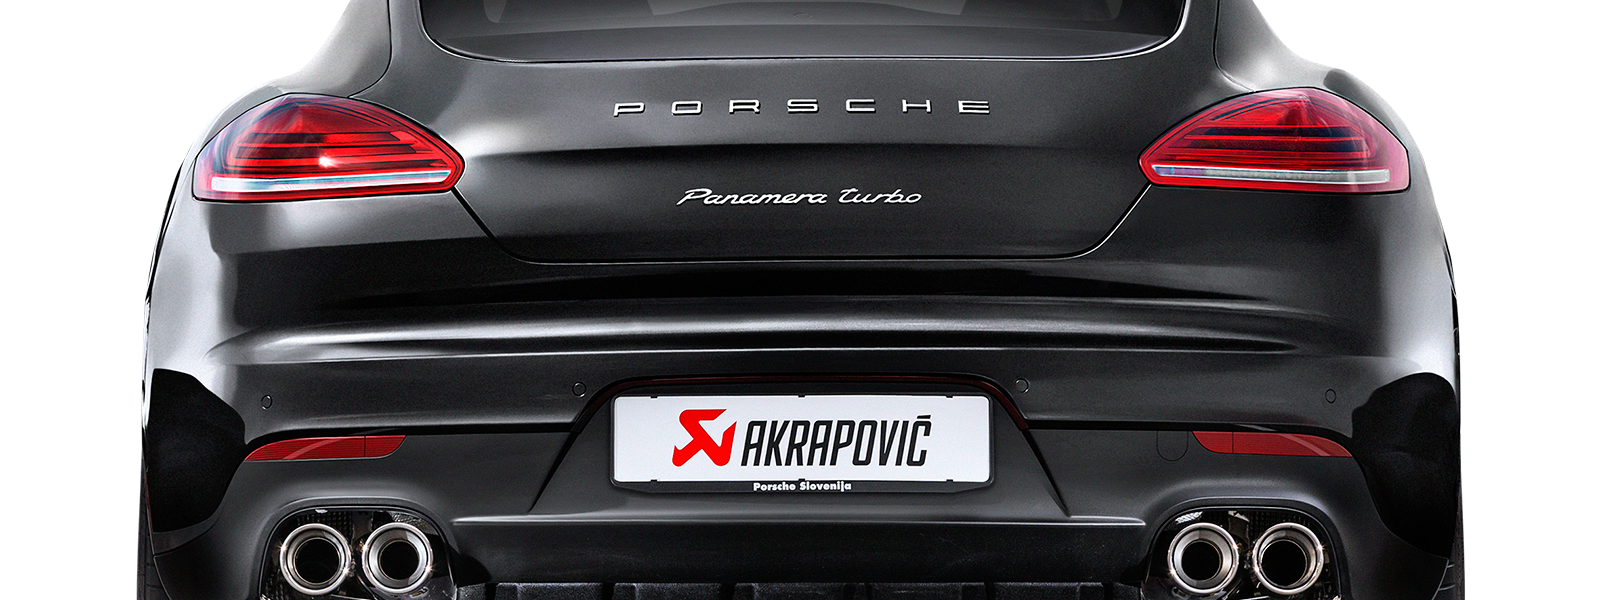 Performance díly pro automobil Porsche Panamera Turbo 970 FL